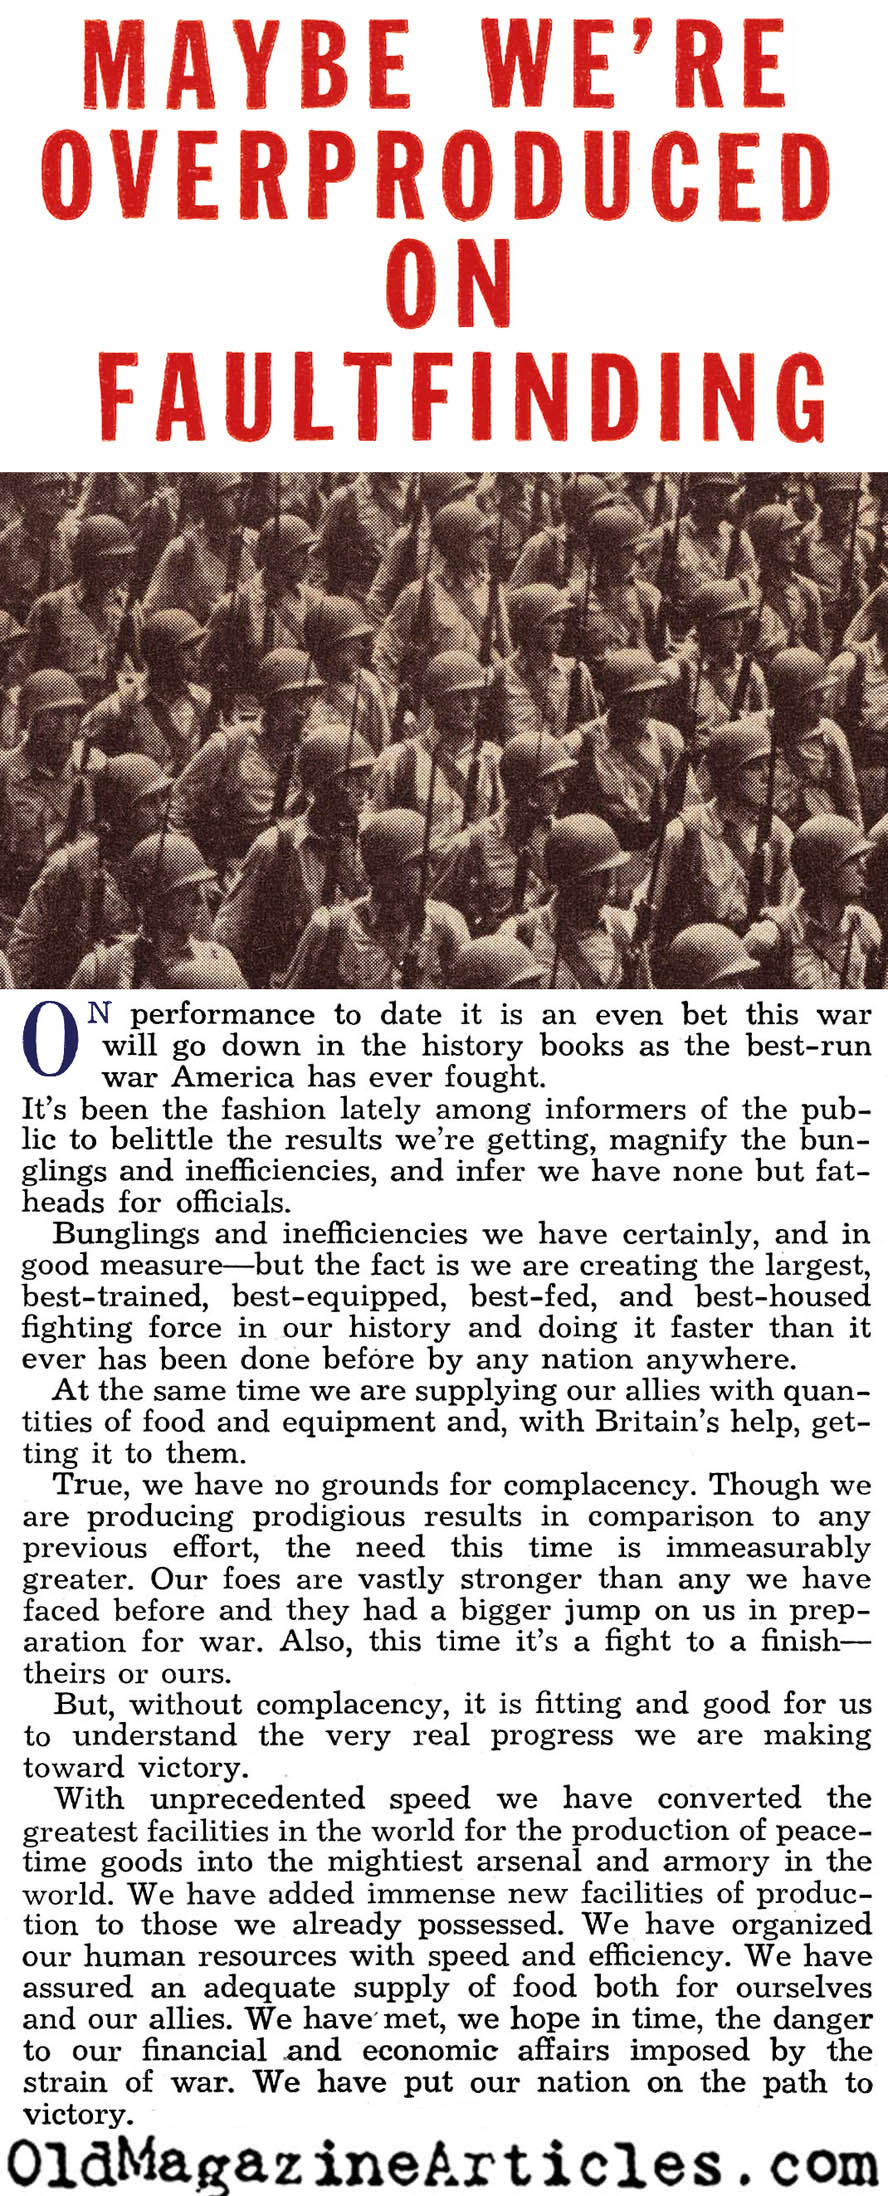 The Well-Organized War (Liberty Magazine, 1942)